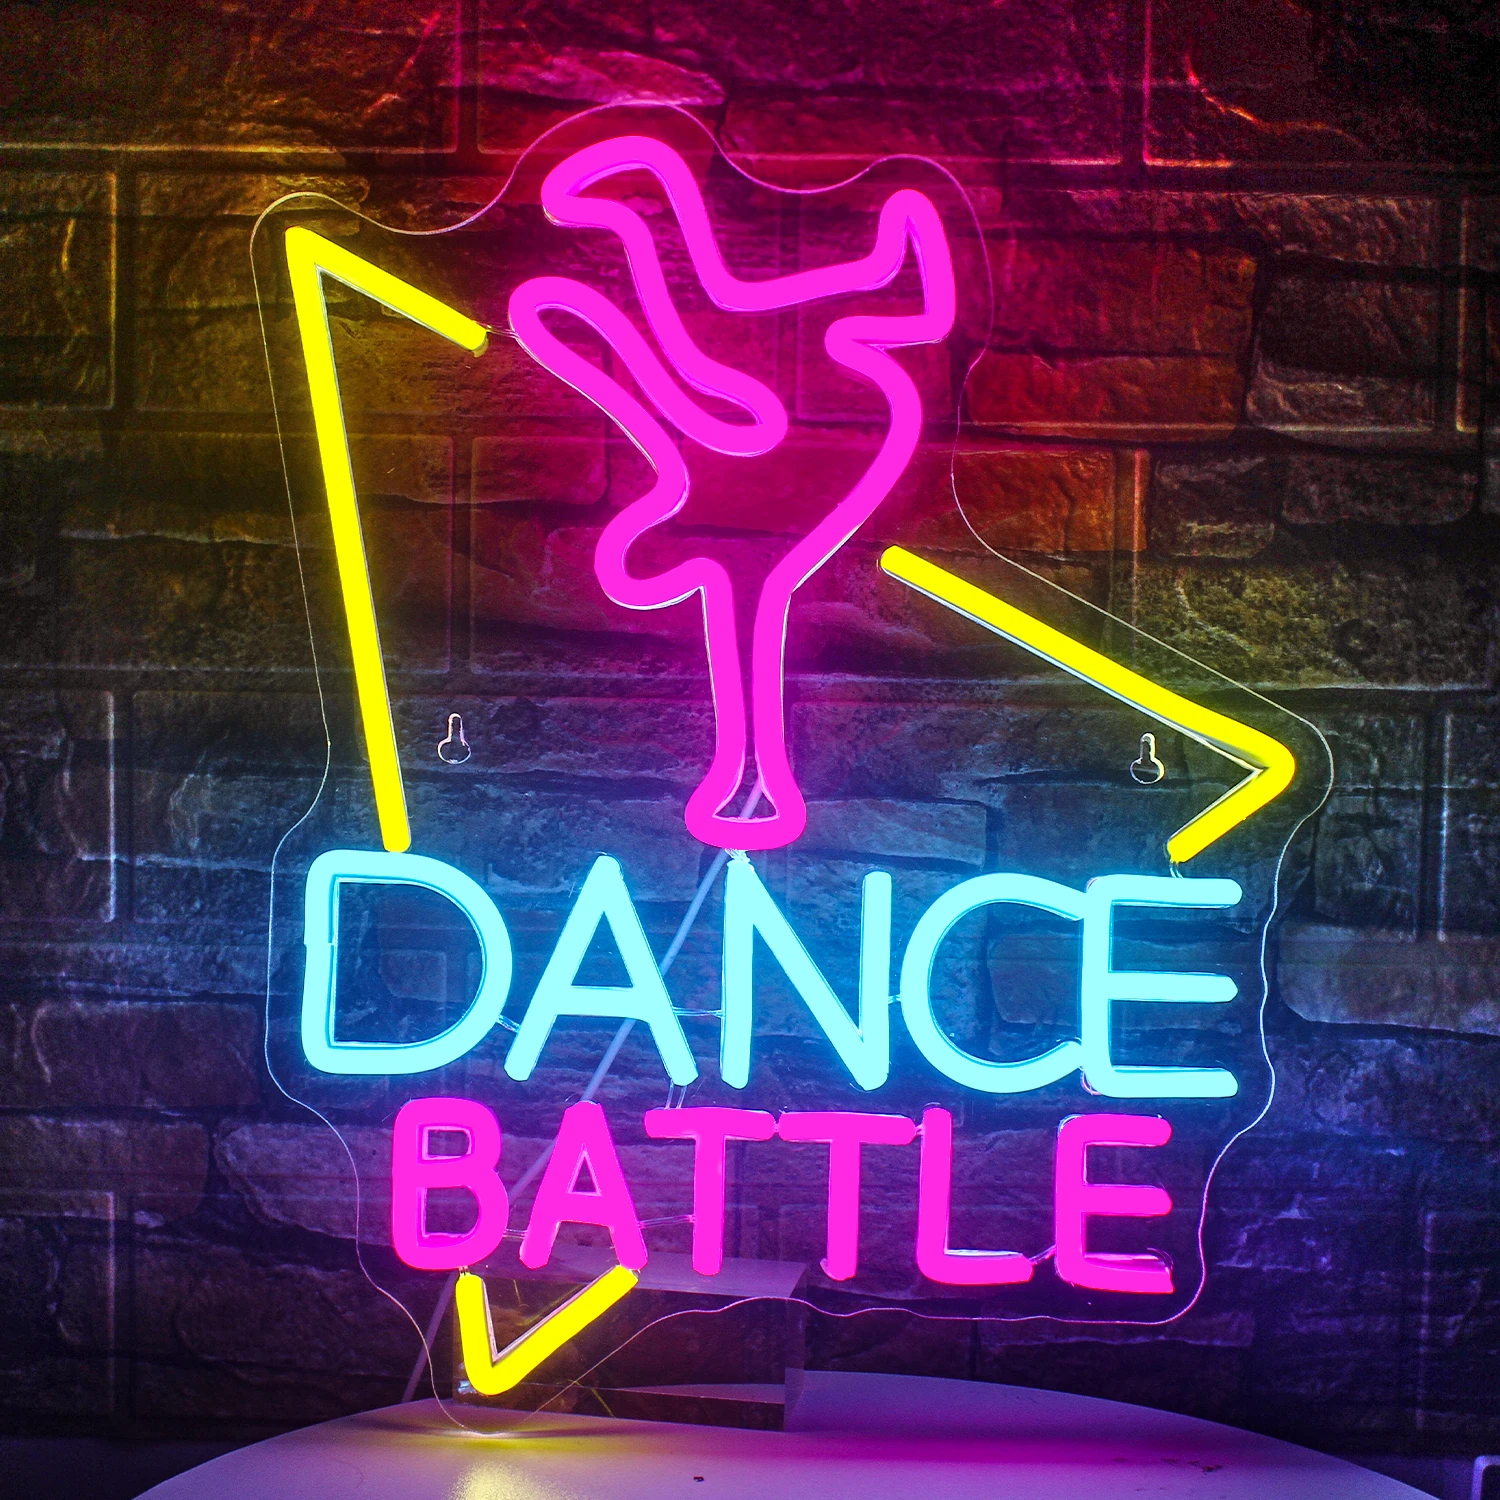 

Dance Battle Neon Signs Light Hip-Hop Studio Dance Room Led Dance Light Up Signs Wall Decor for Man Cave Dancing Party Bar Neon